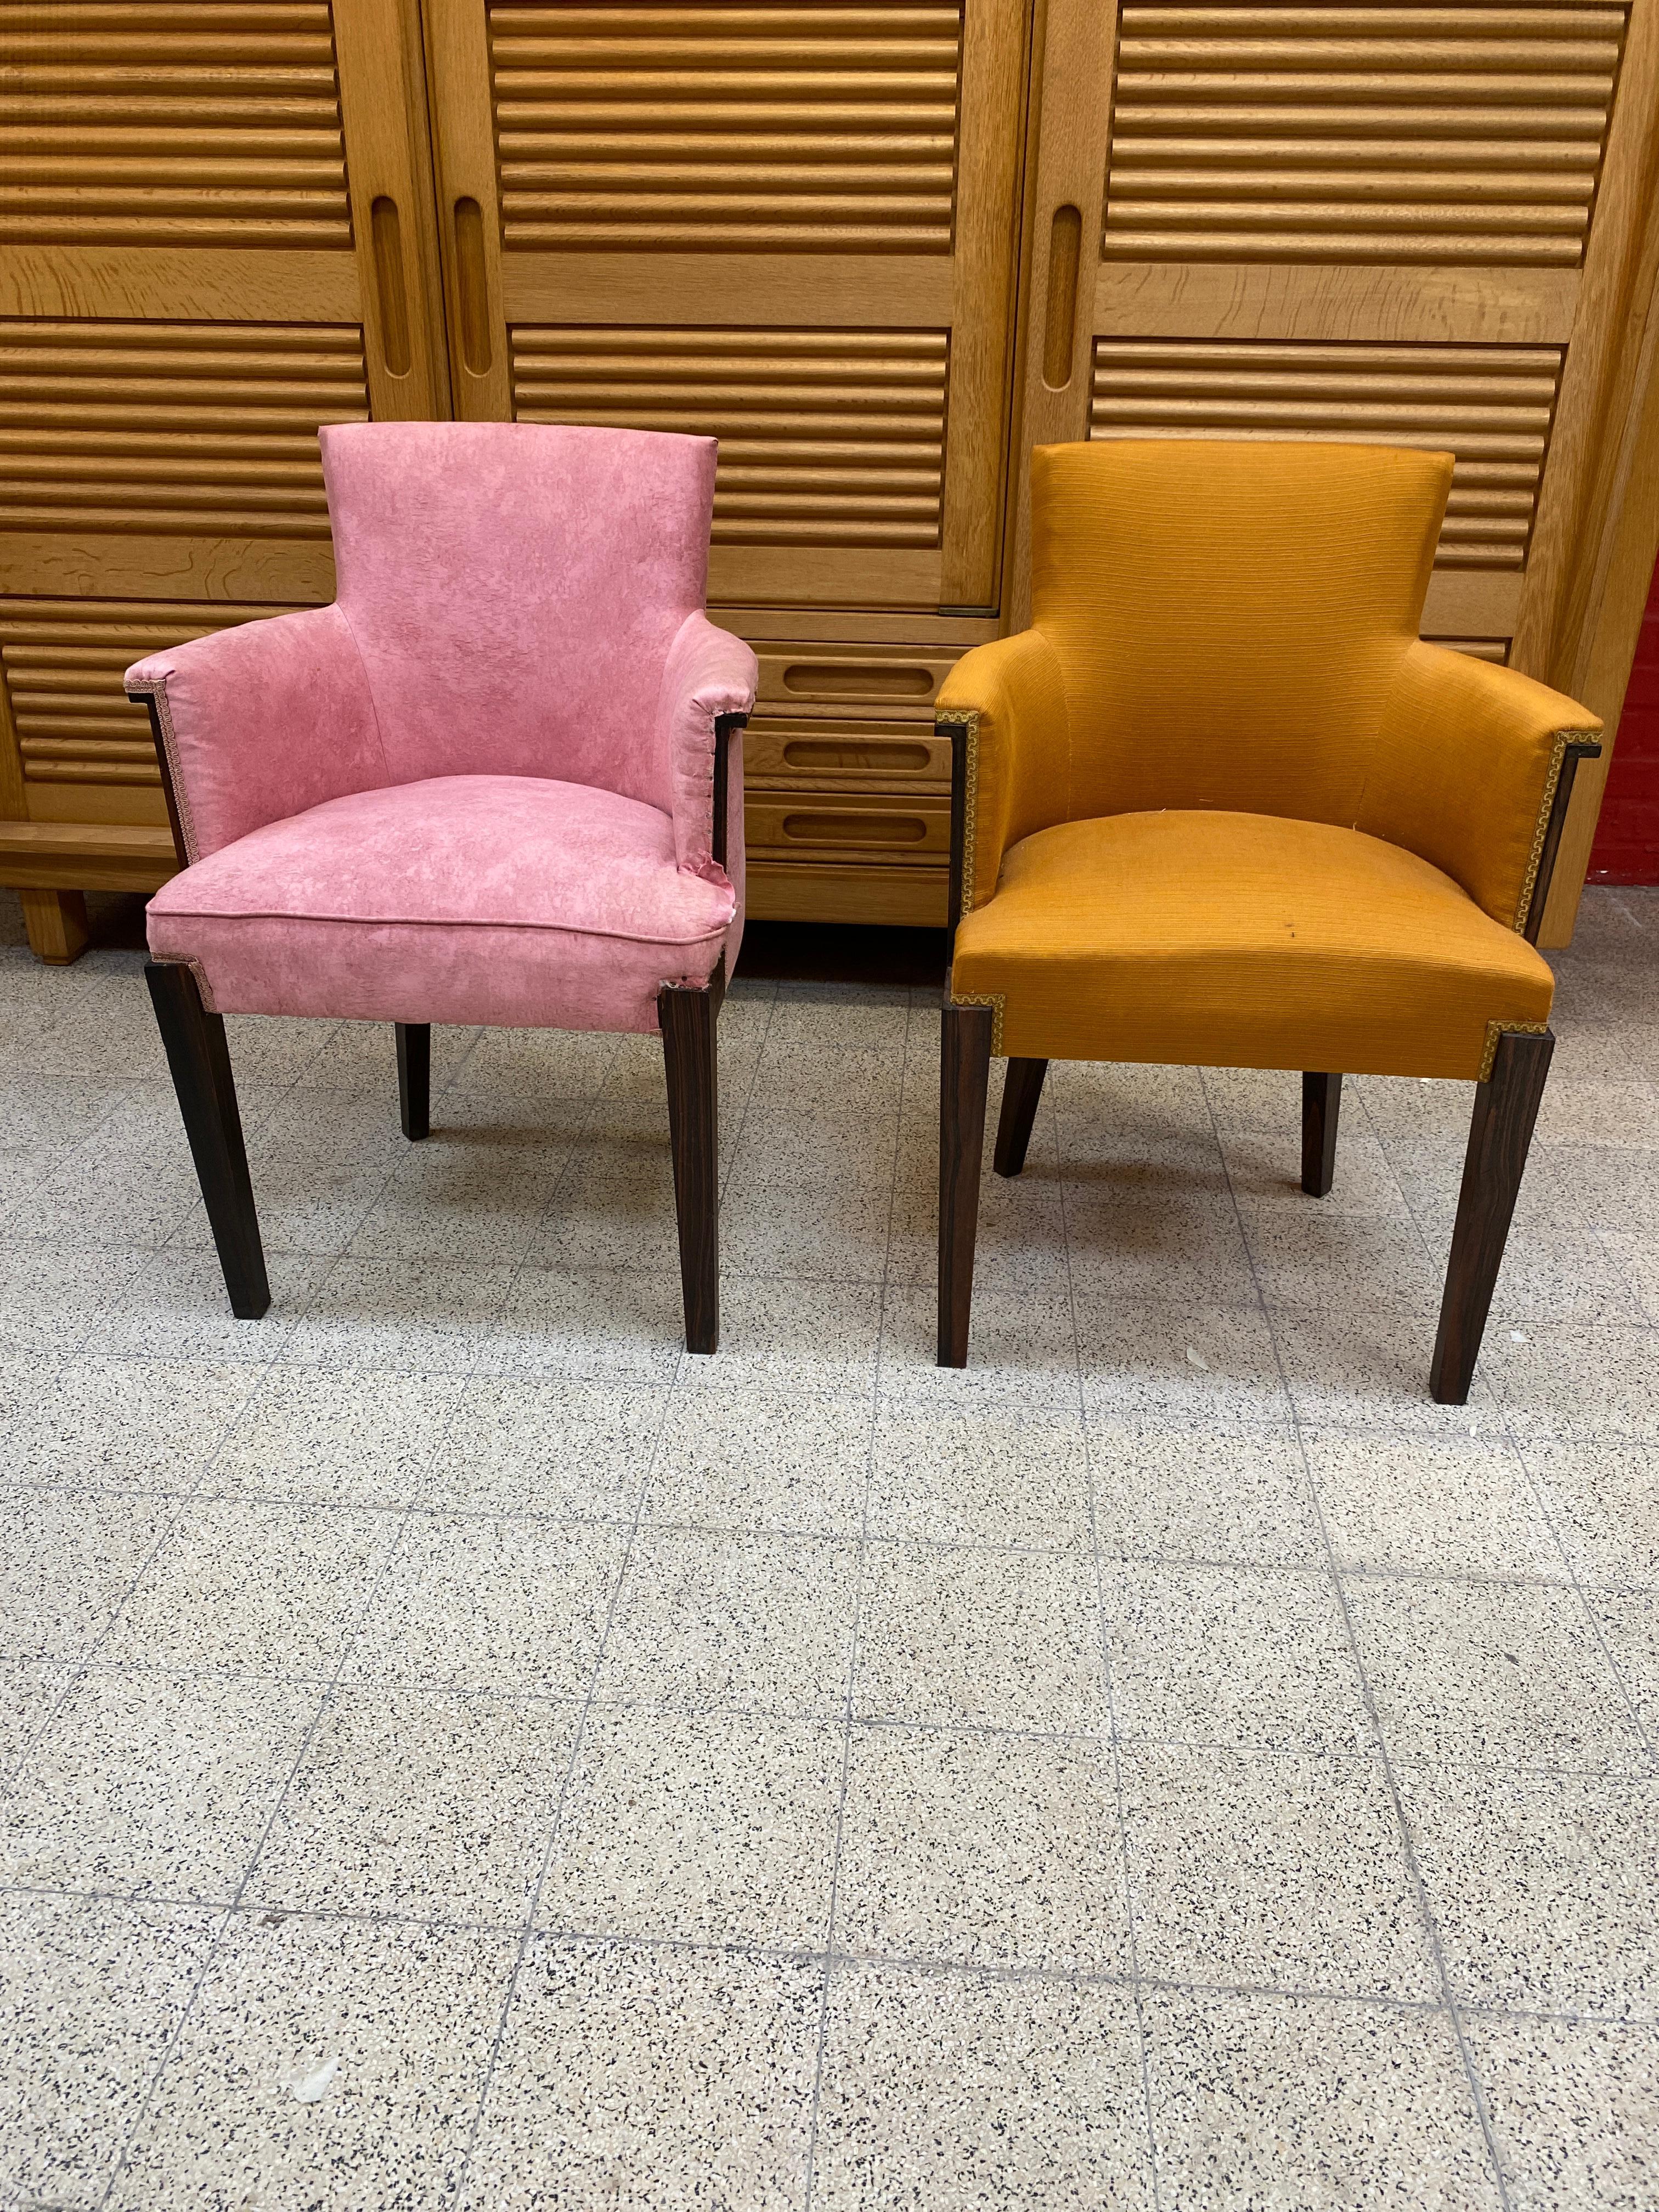 Pair of elegant Art Deco armchairs in the style of Dominique, circa 1930-1940.